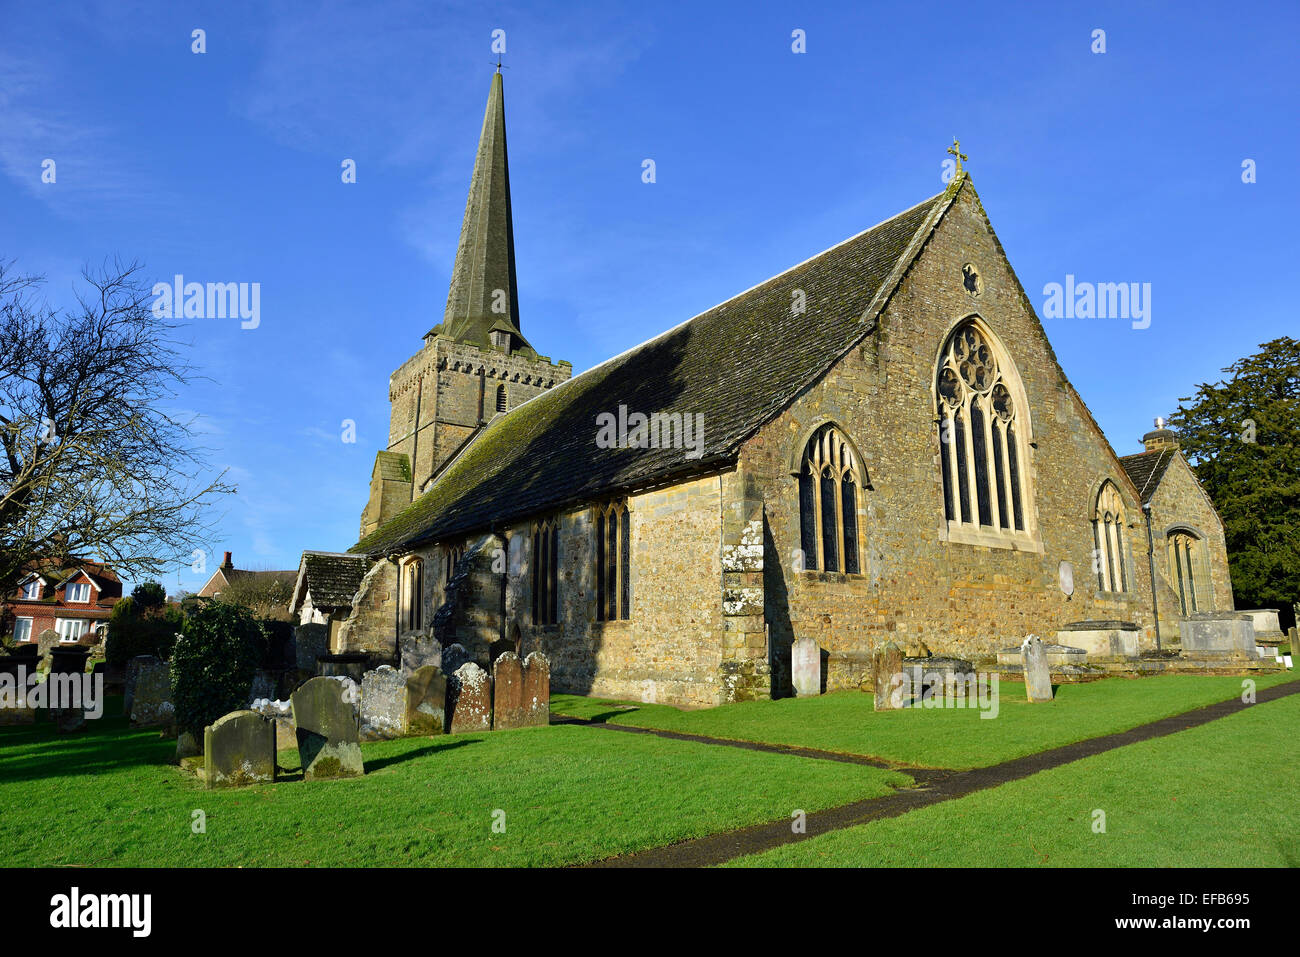 holy-trinity-church-cuckfield-village-west-sussex-england-uk-EFB695.jpg